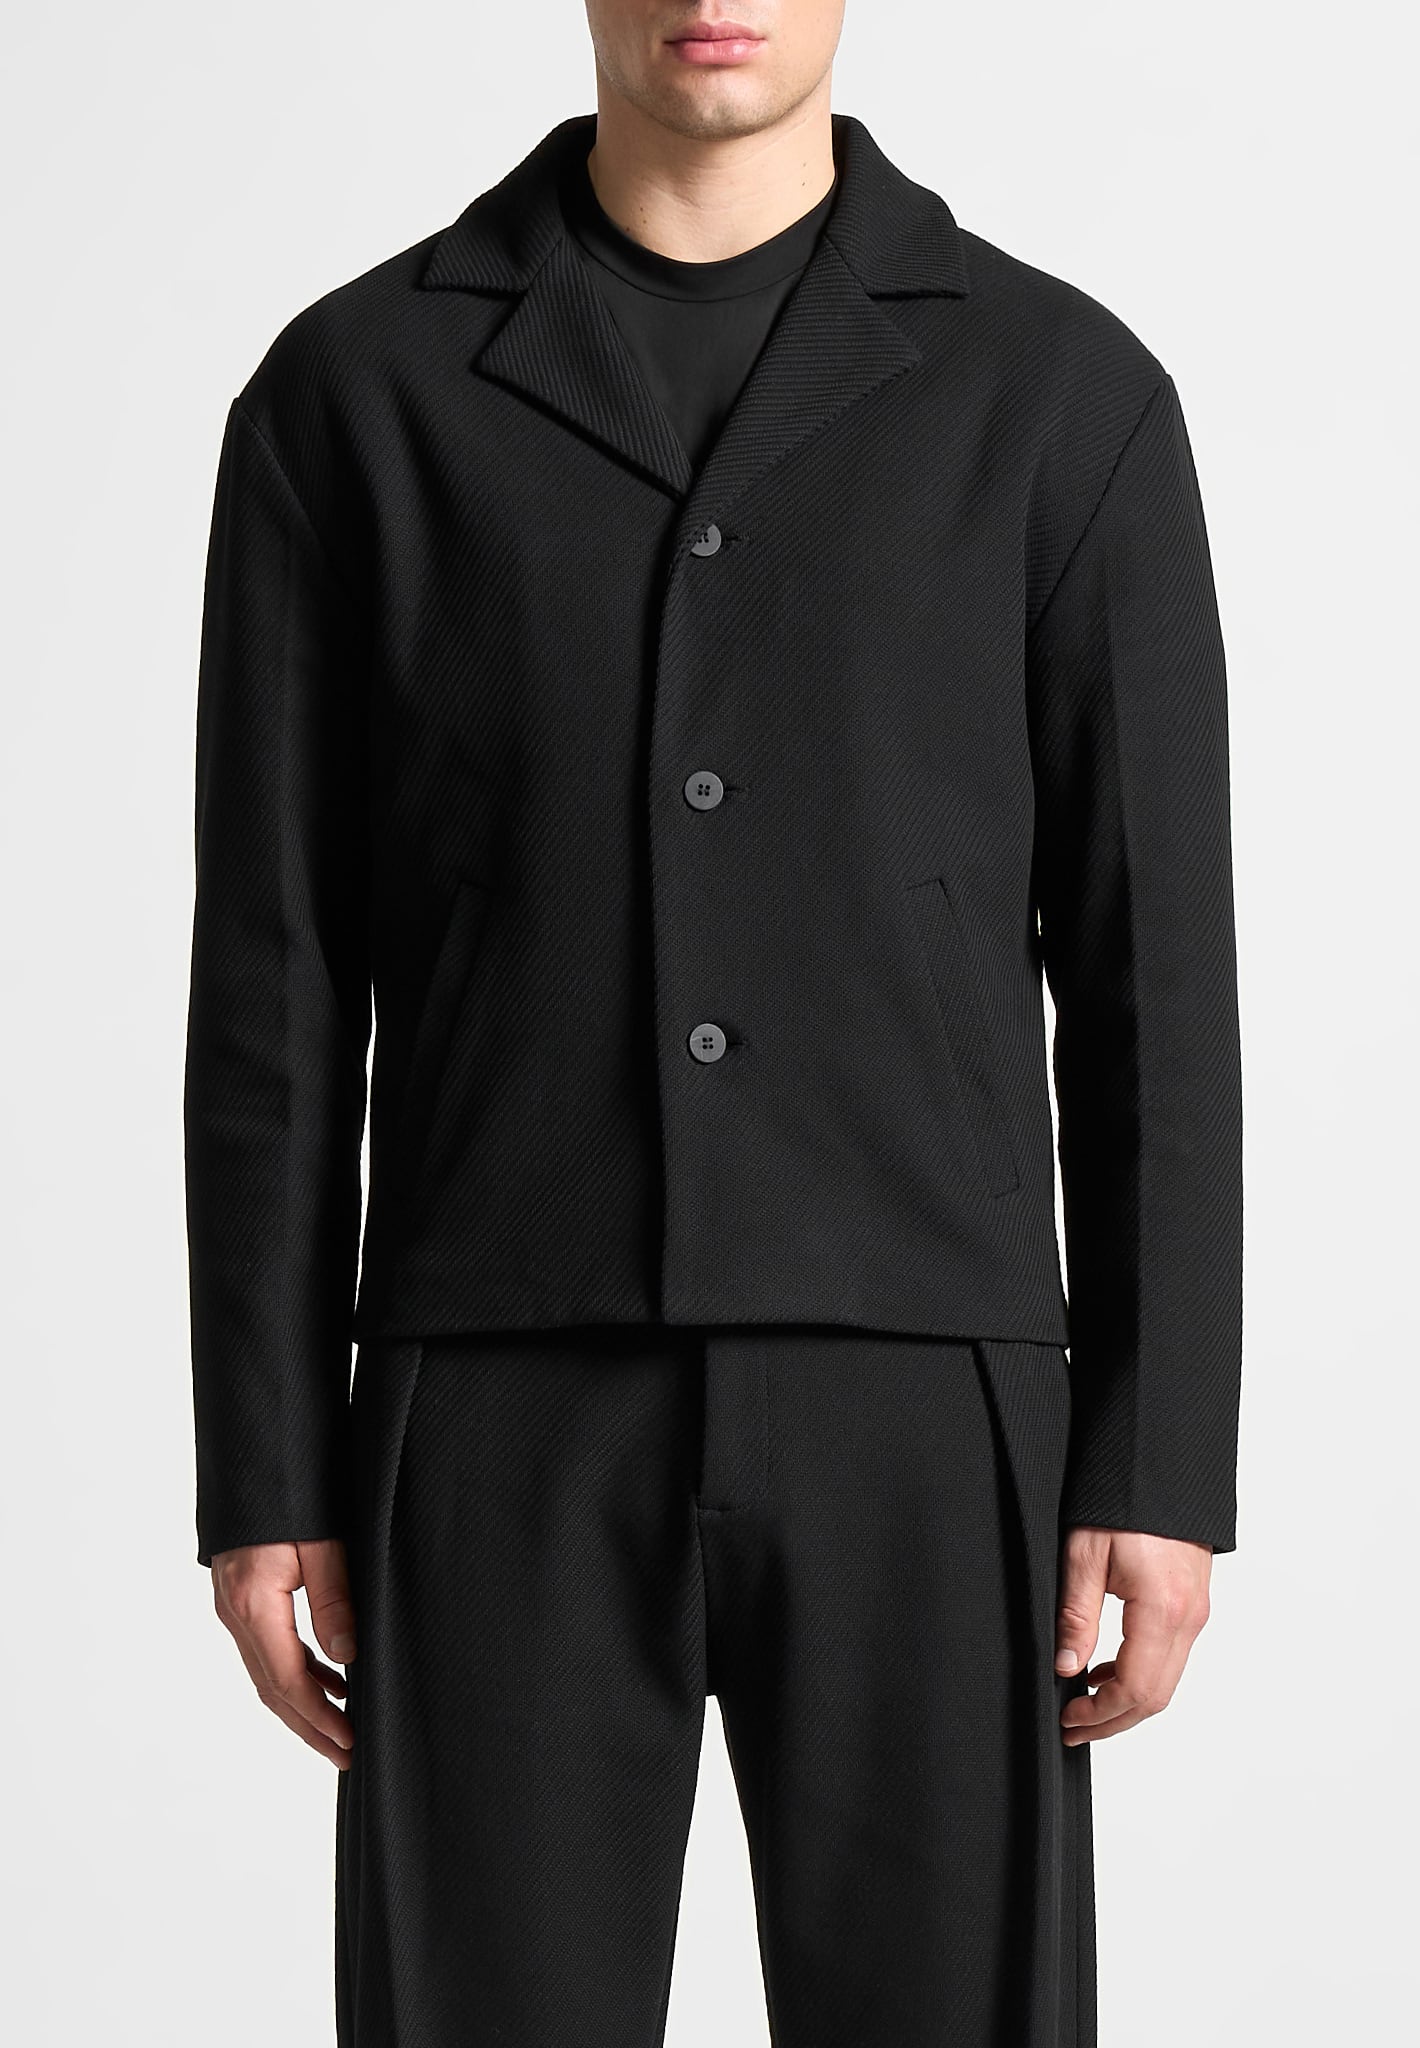 revere-collar-twill-jacket-black